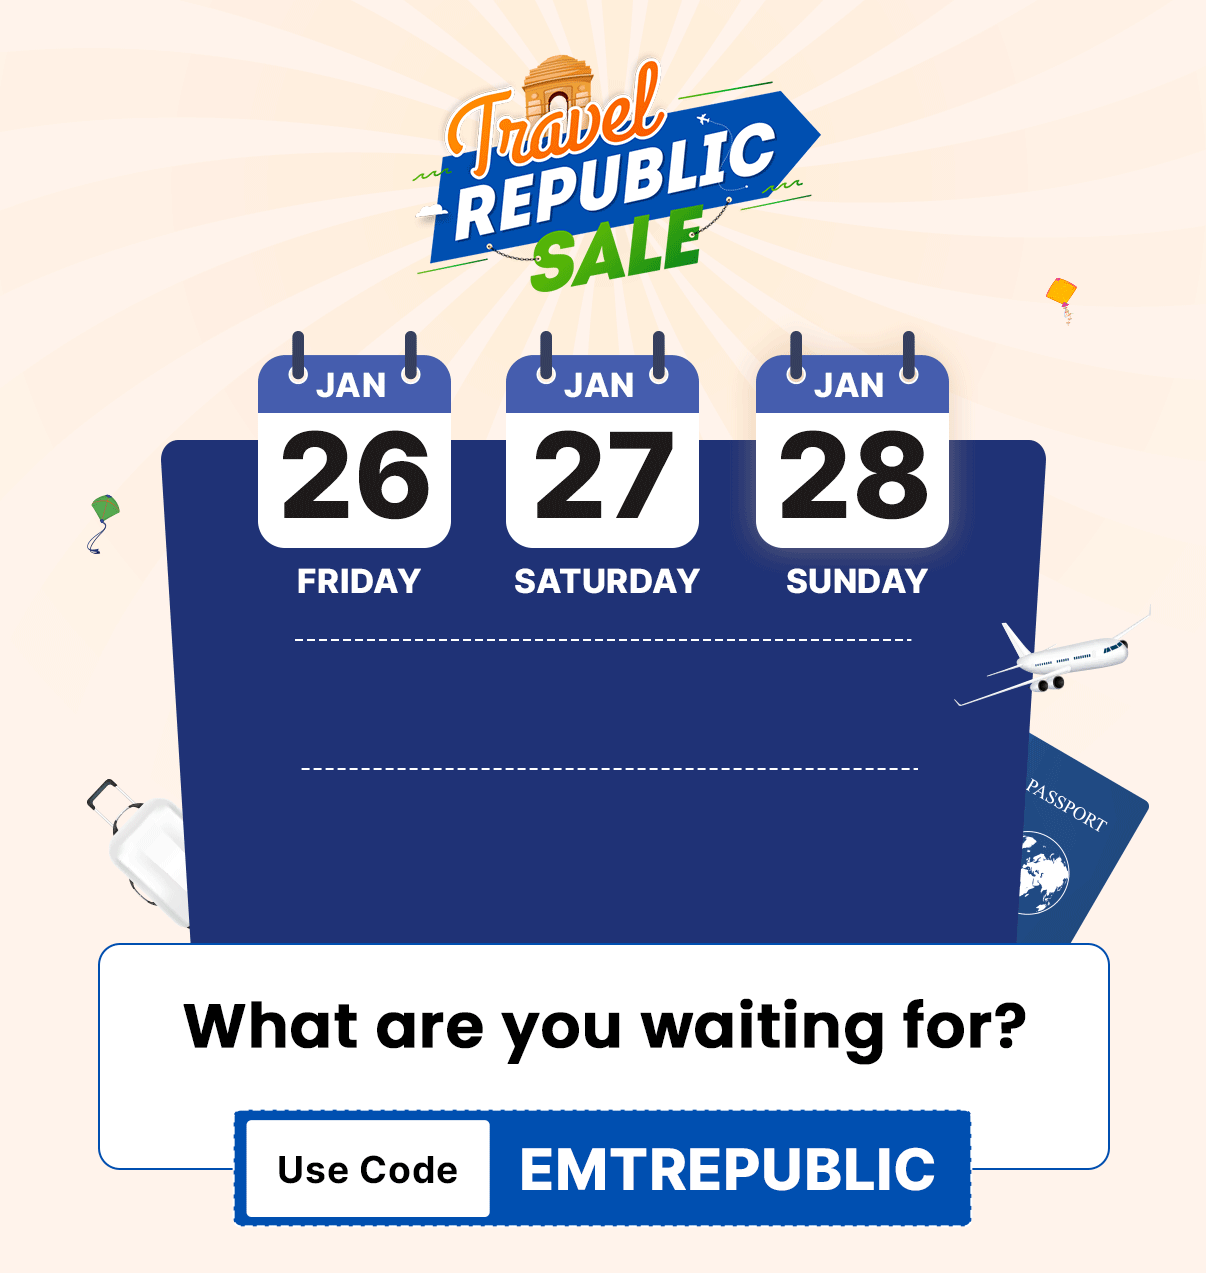 Travel Republic Sale!